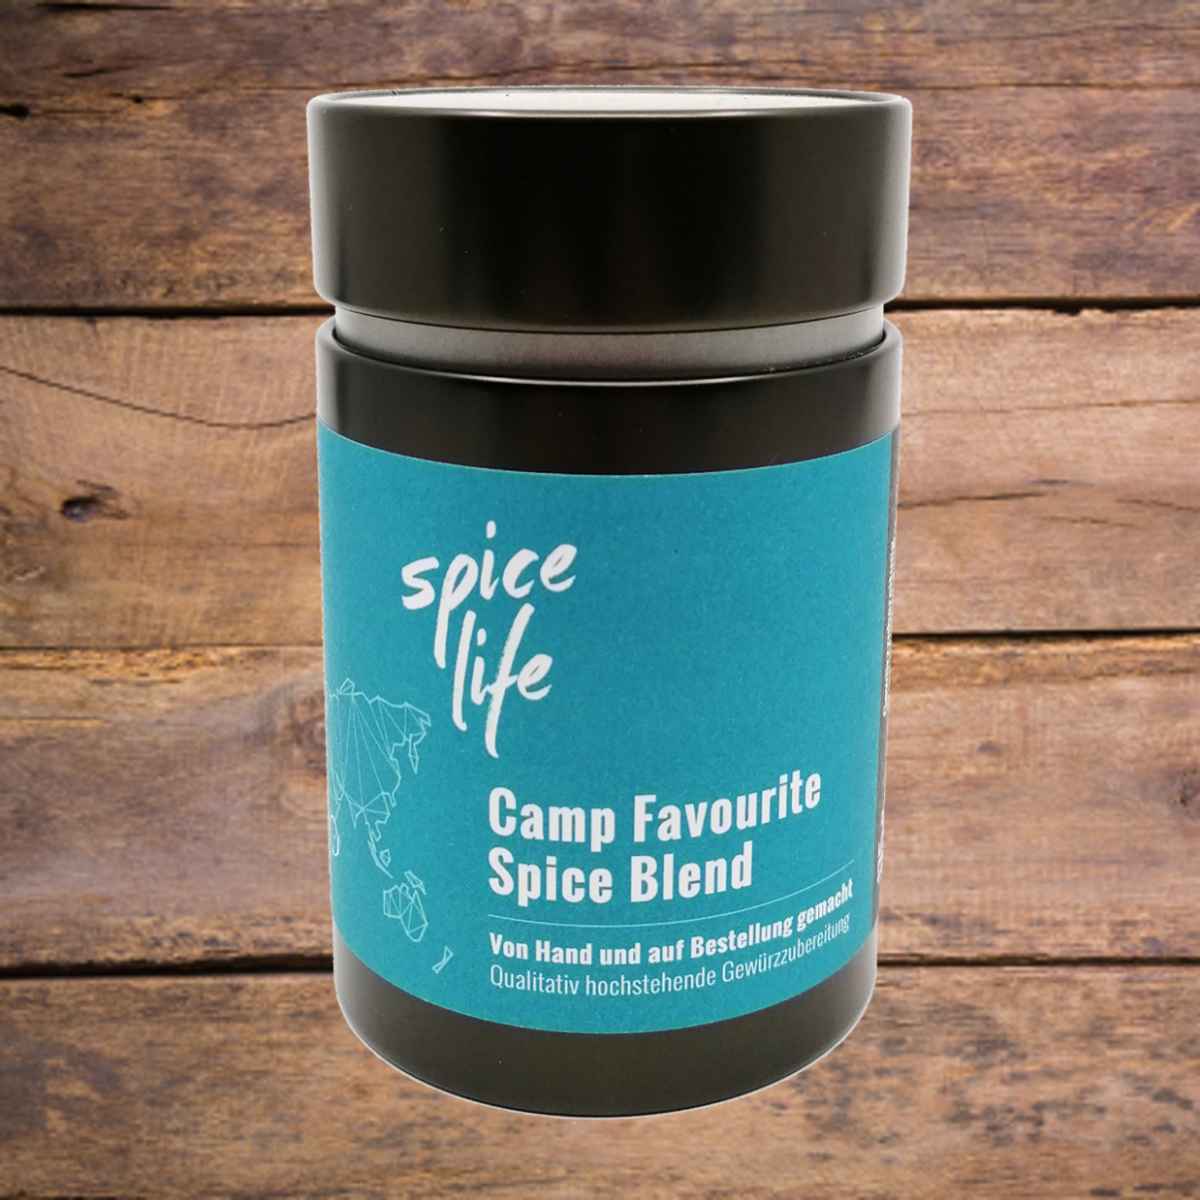 Camp Favourite Spice Blend